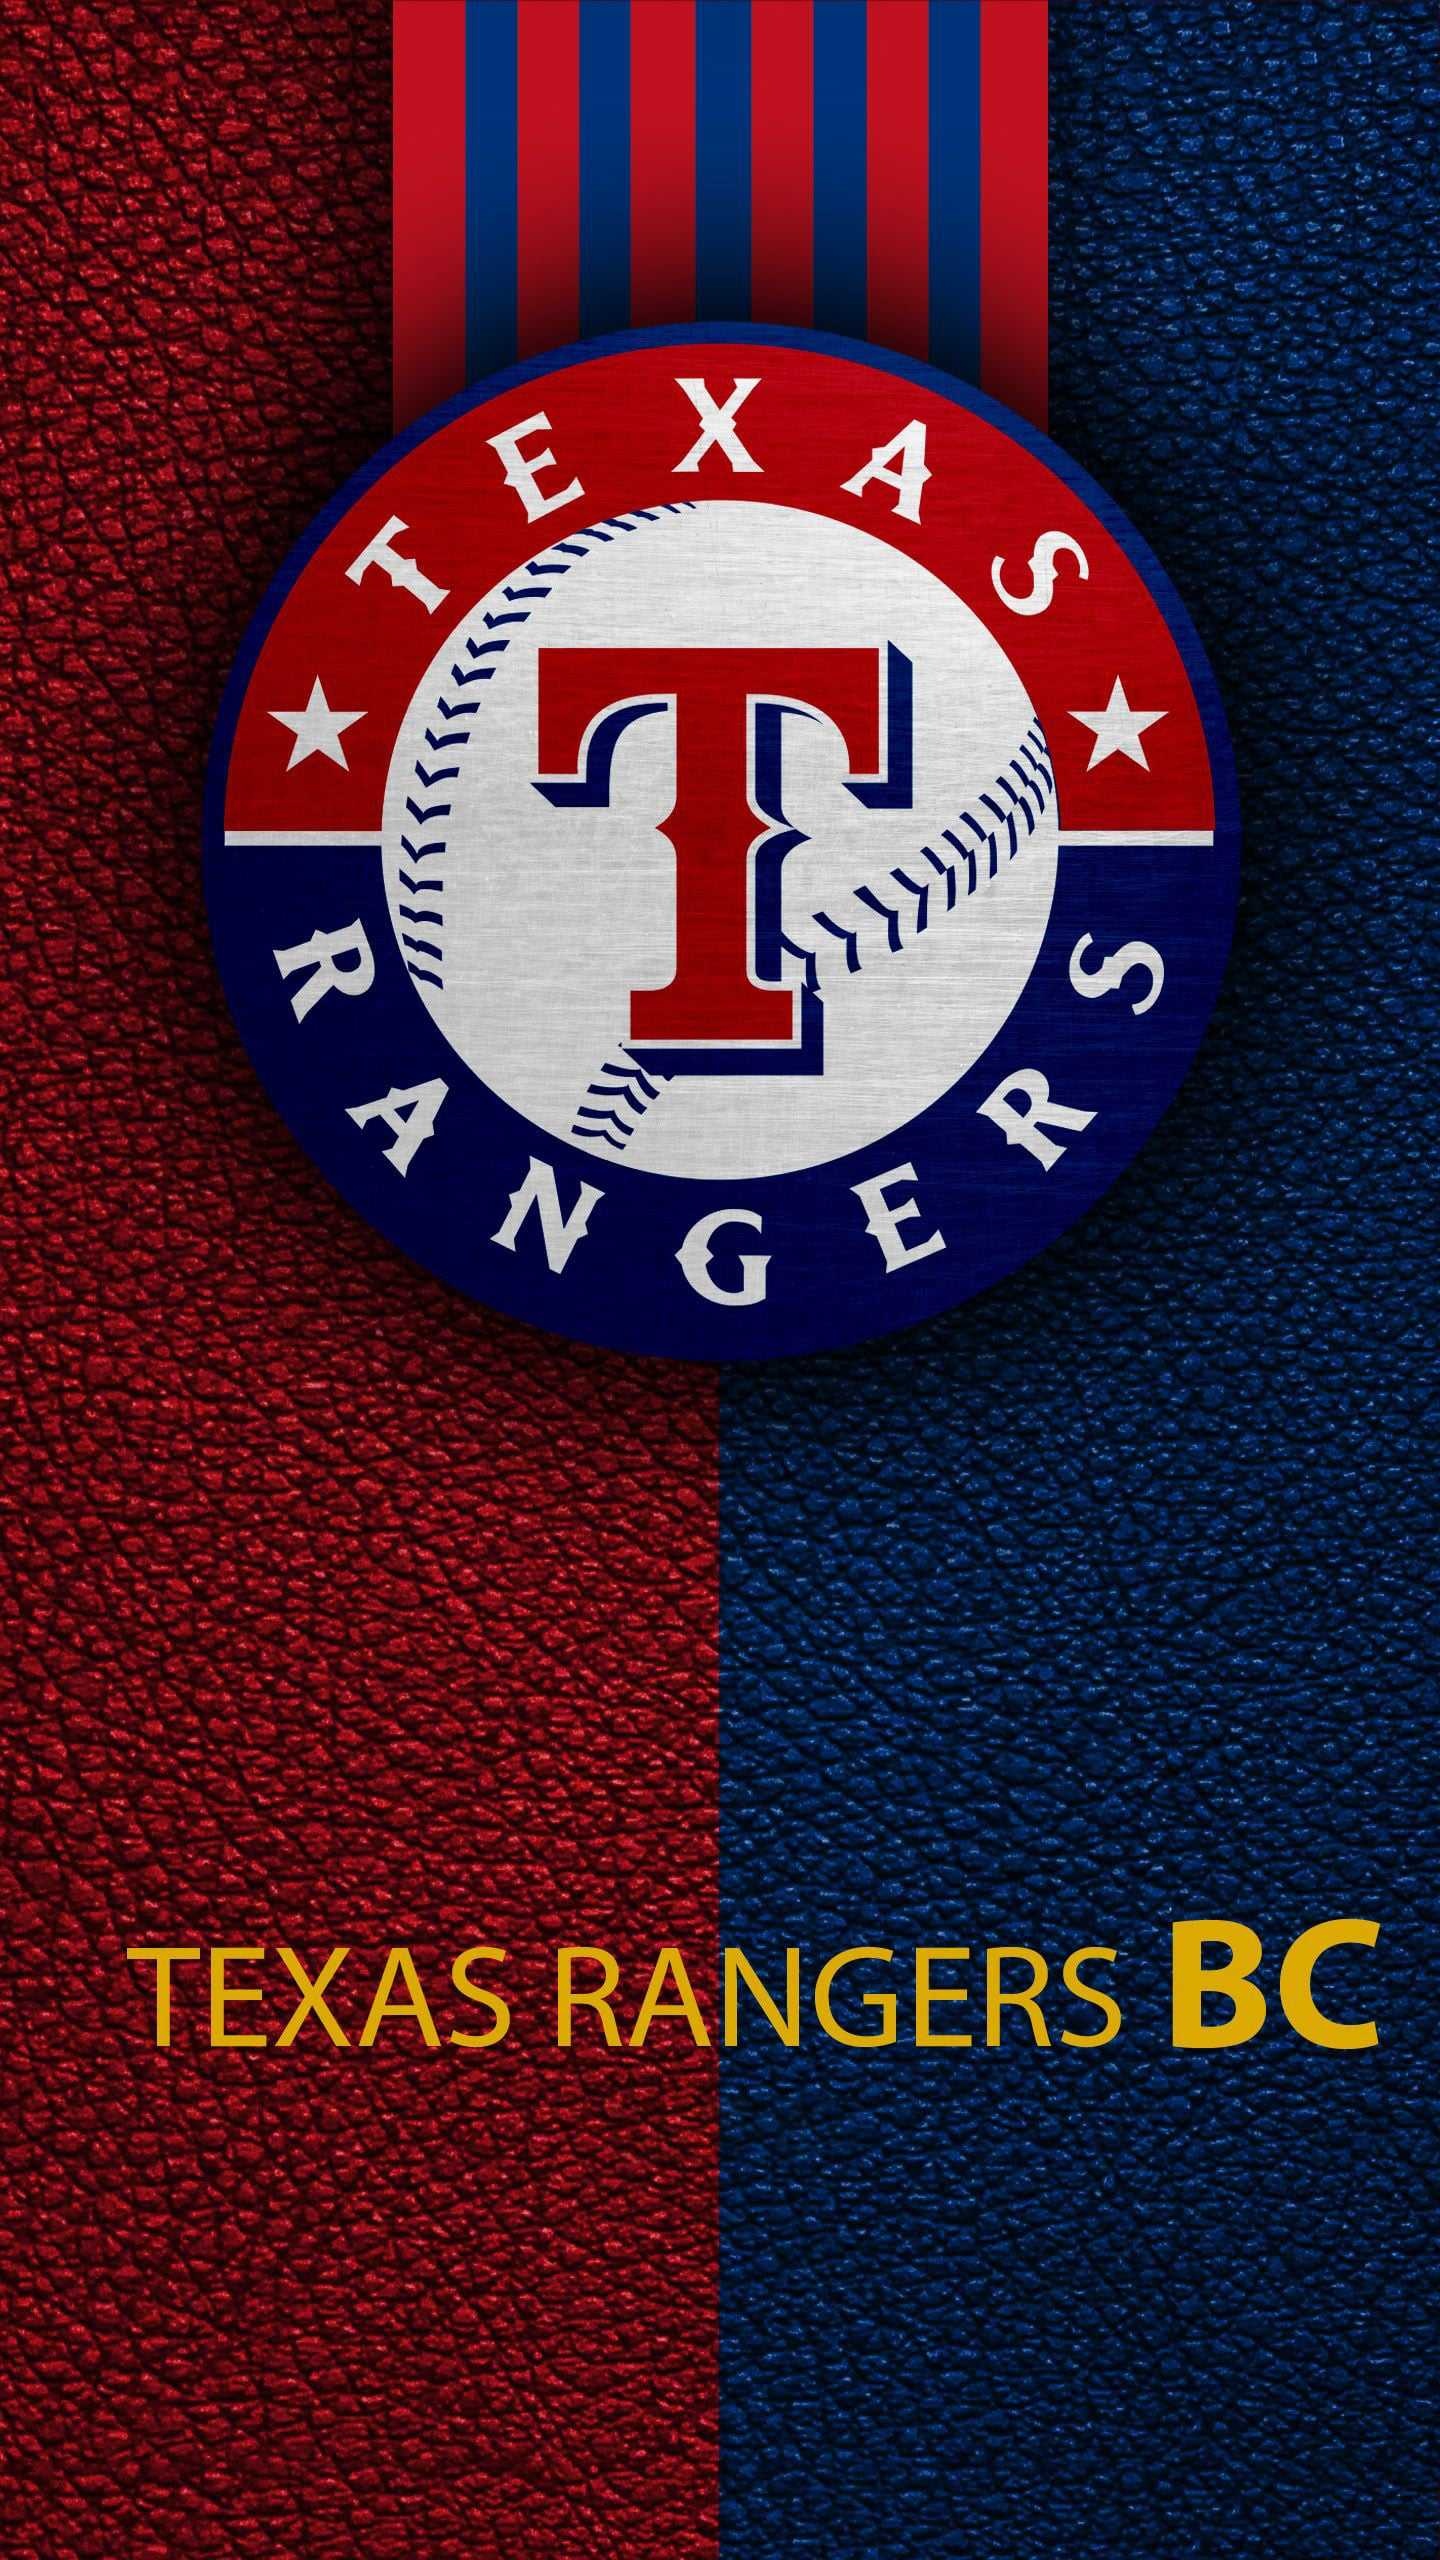 Texas Rangers, HD wallpapers, Free download, Team pride, 1440x2560 HD Handy